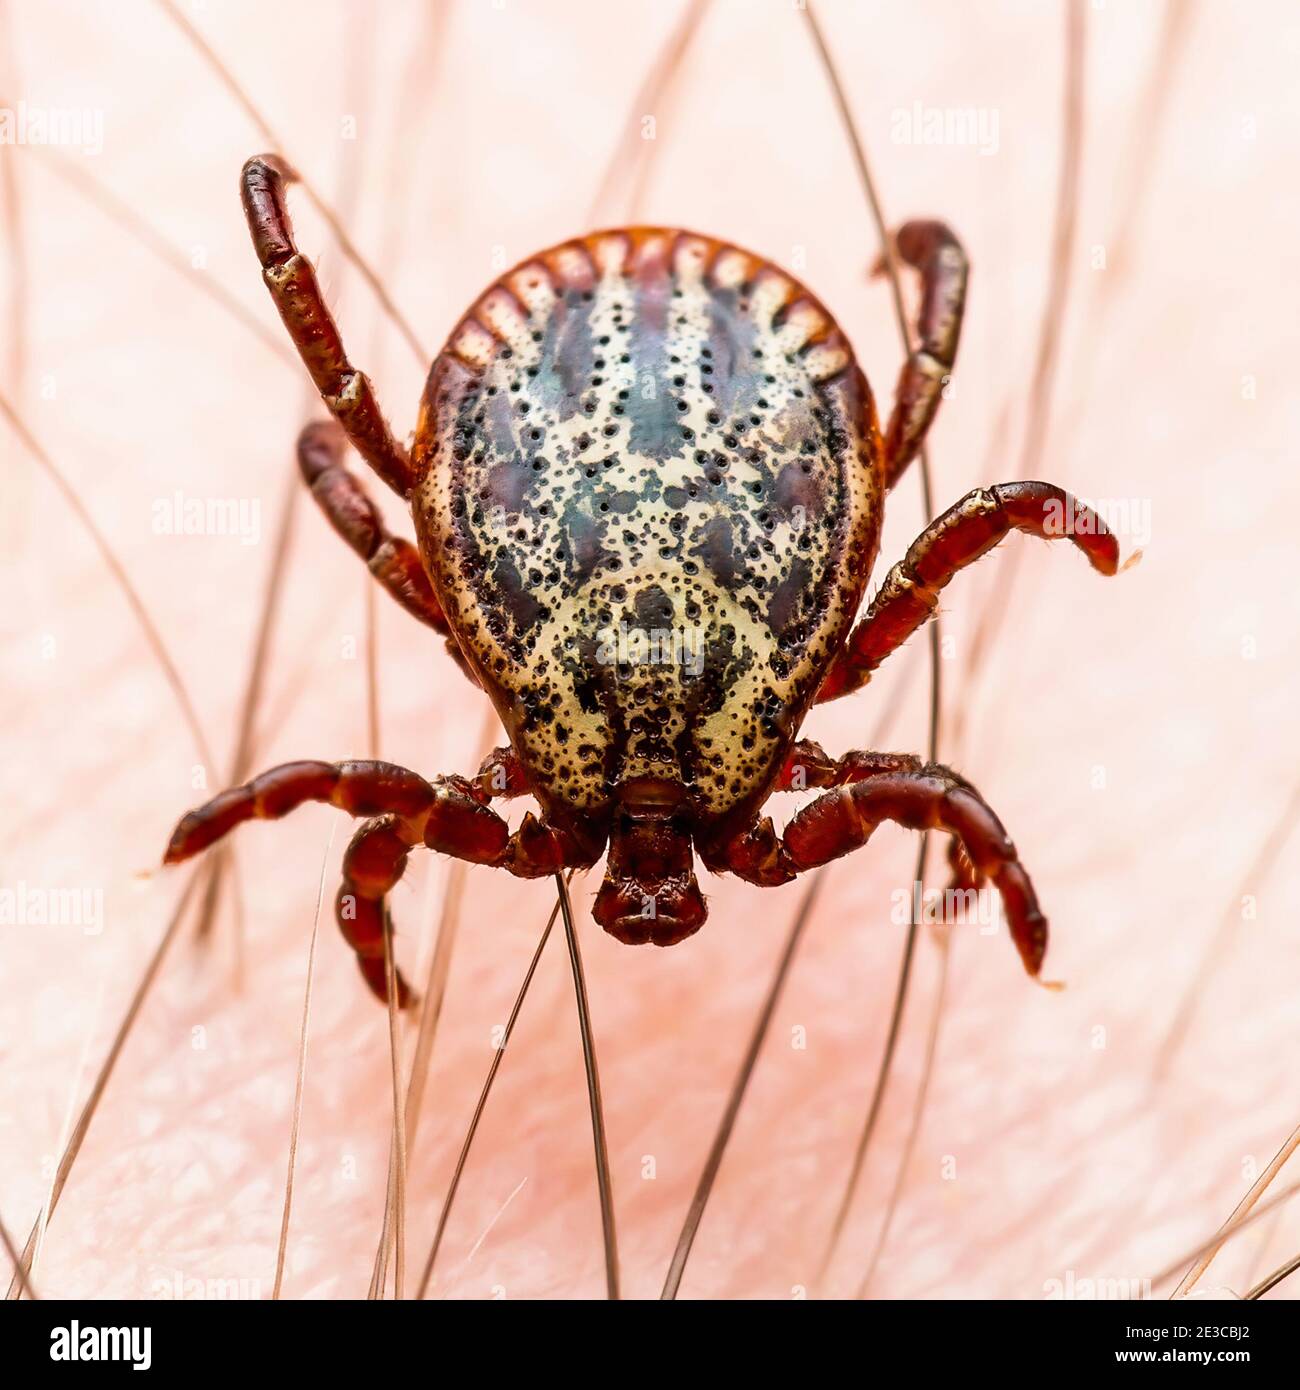 Infektiöse Enzephalitis Tick Insekt auf der Haut. Enzephalitis Virus oder Lyme-Borreliose infizierte Dermacentor Tick Arachnid Parasiten Makro. Stockfoto